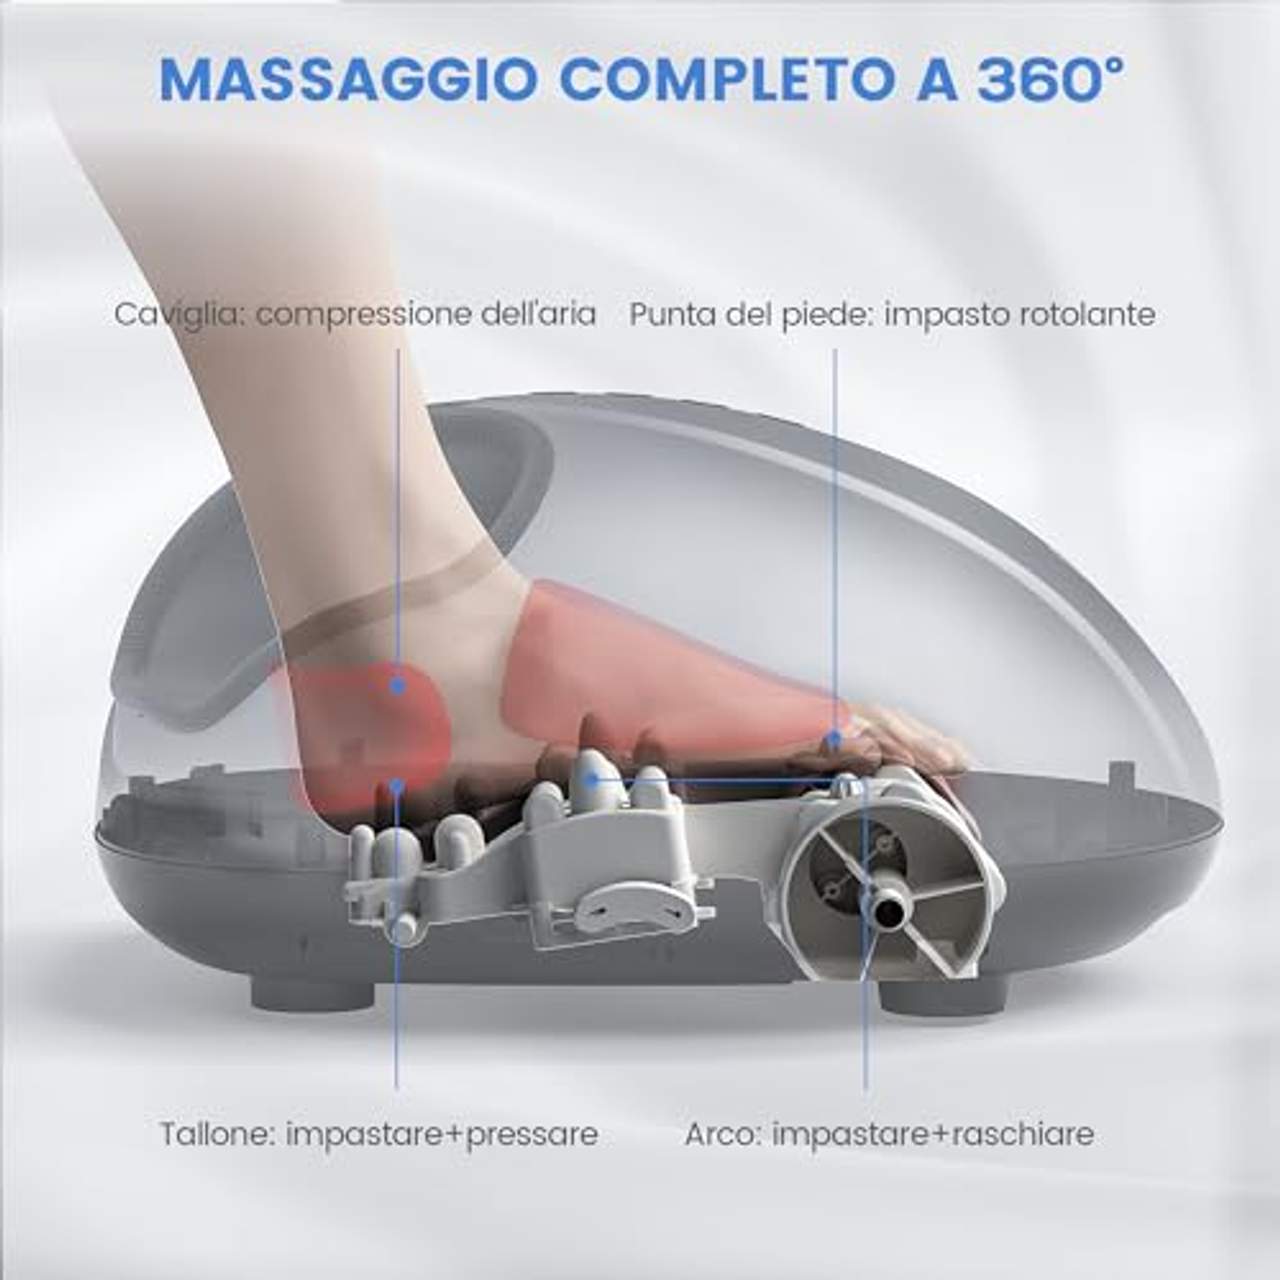 Breo Fußmassagegerät mit Wärmefunktion